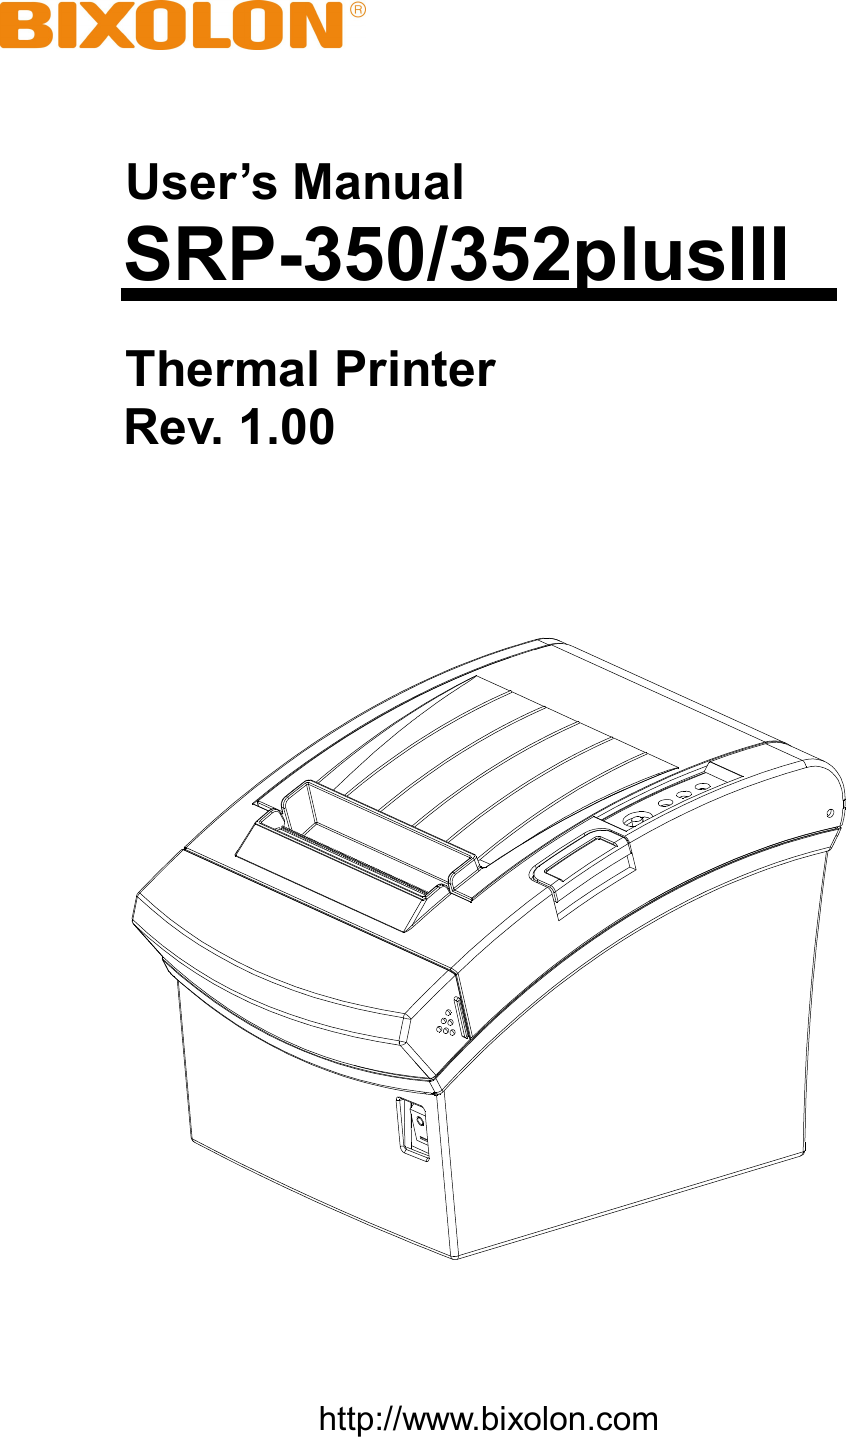       User’s Manual SRP-350/352plusIII Thermal Printer Rev. 1.00        http://www.bixolon.com 